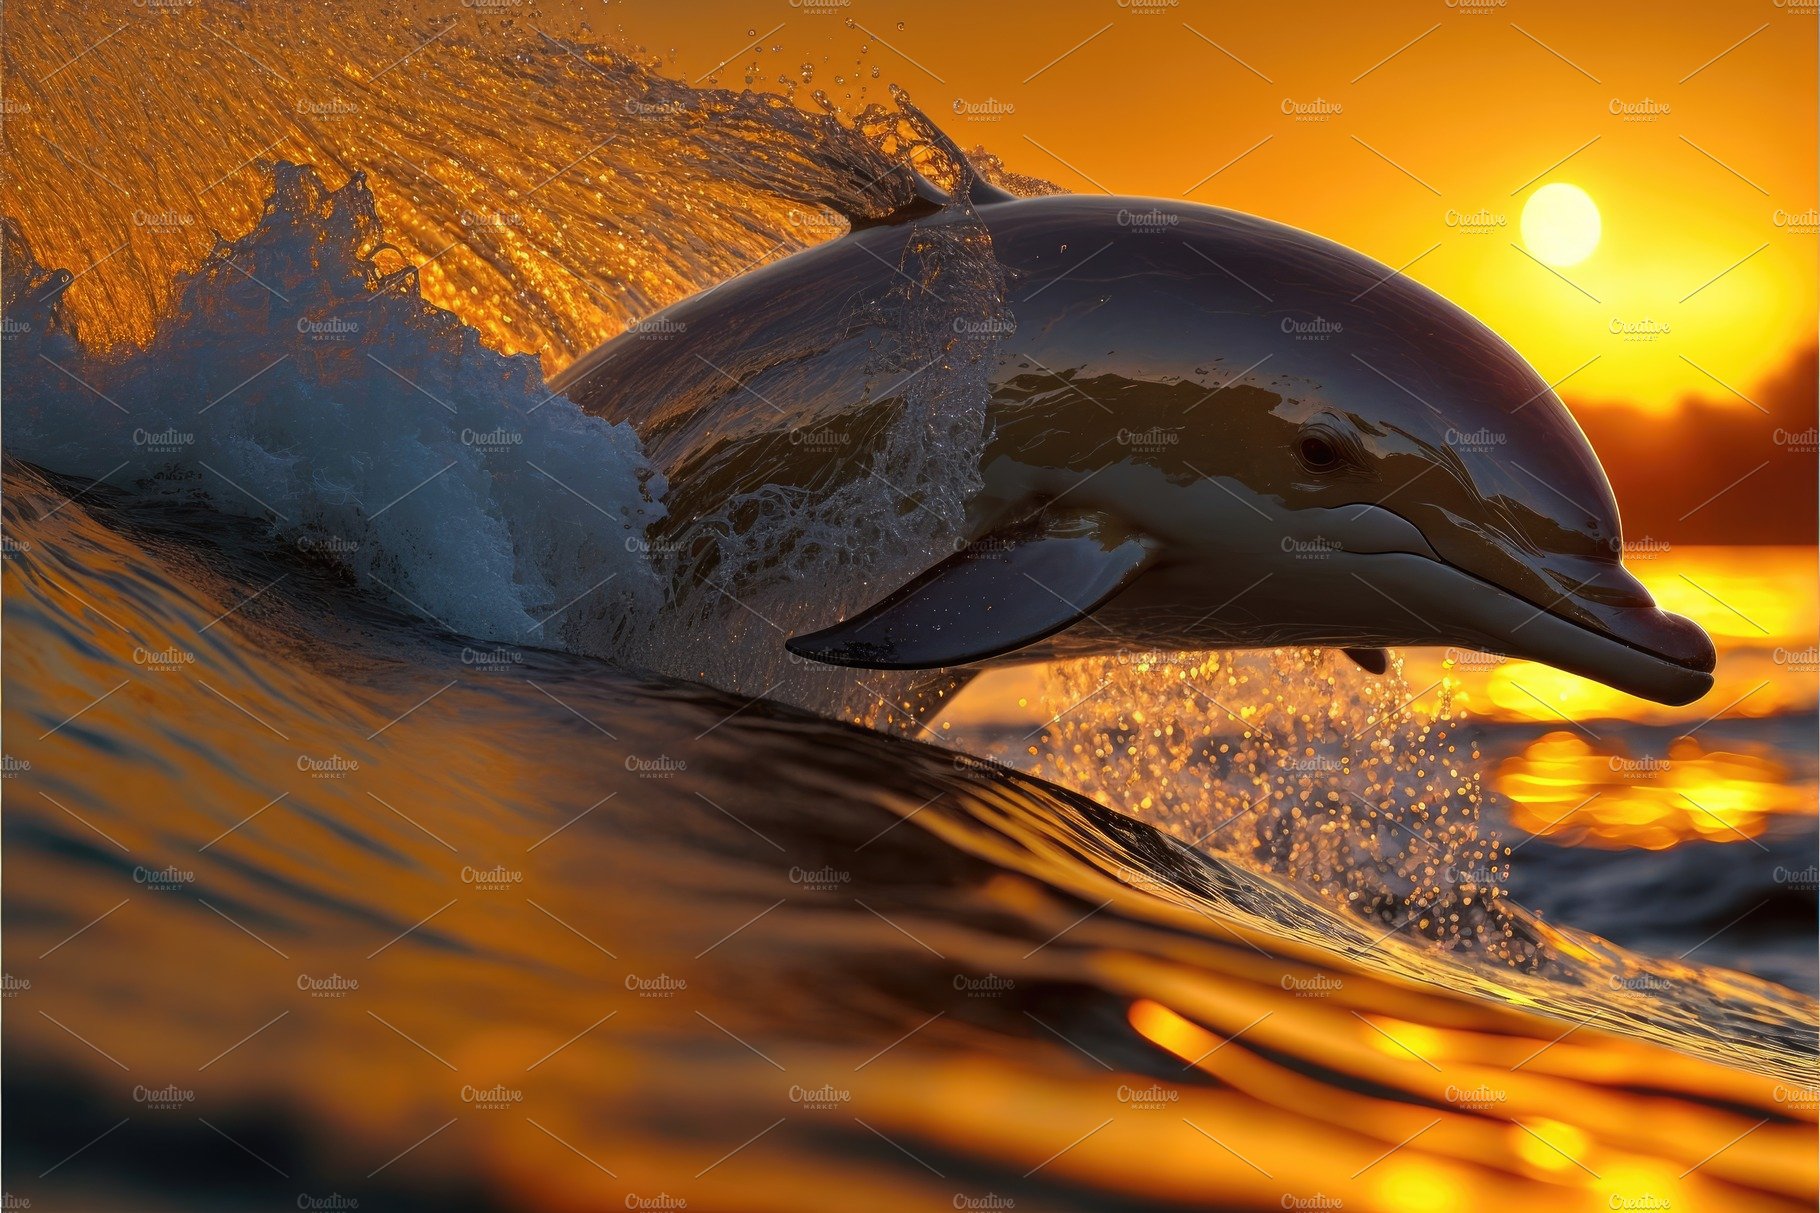 Sunset Dolphins - Hawkesbury Regional Gallery